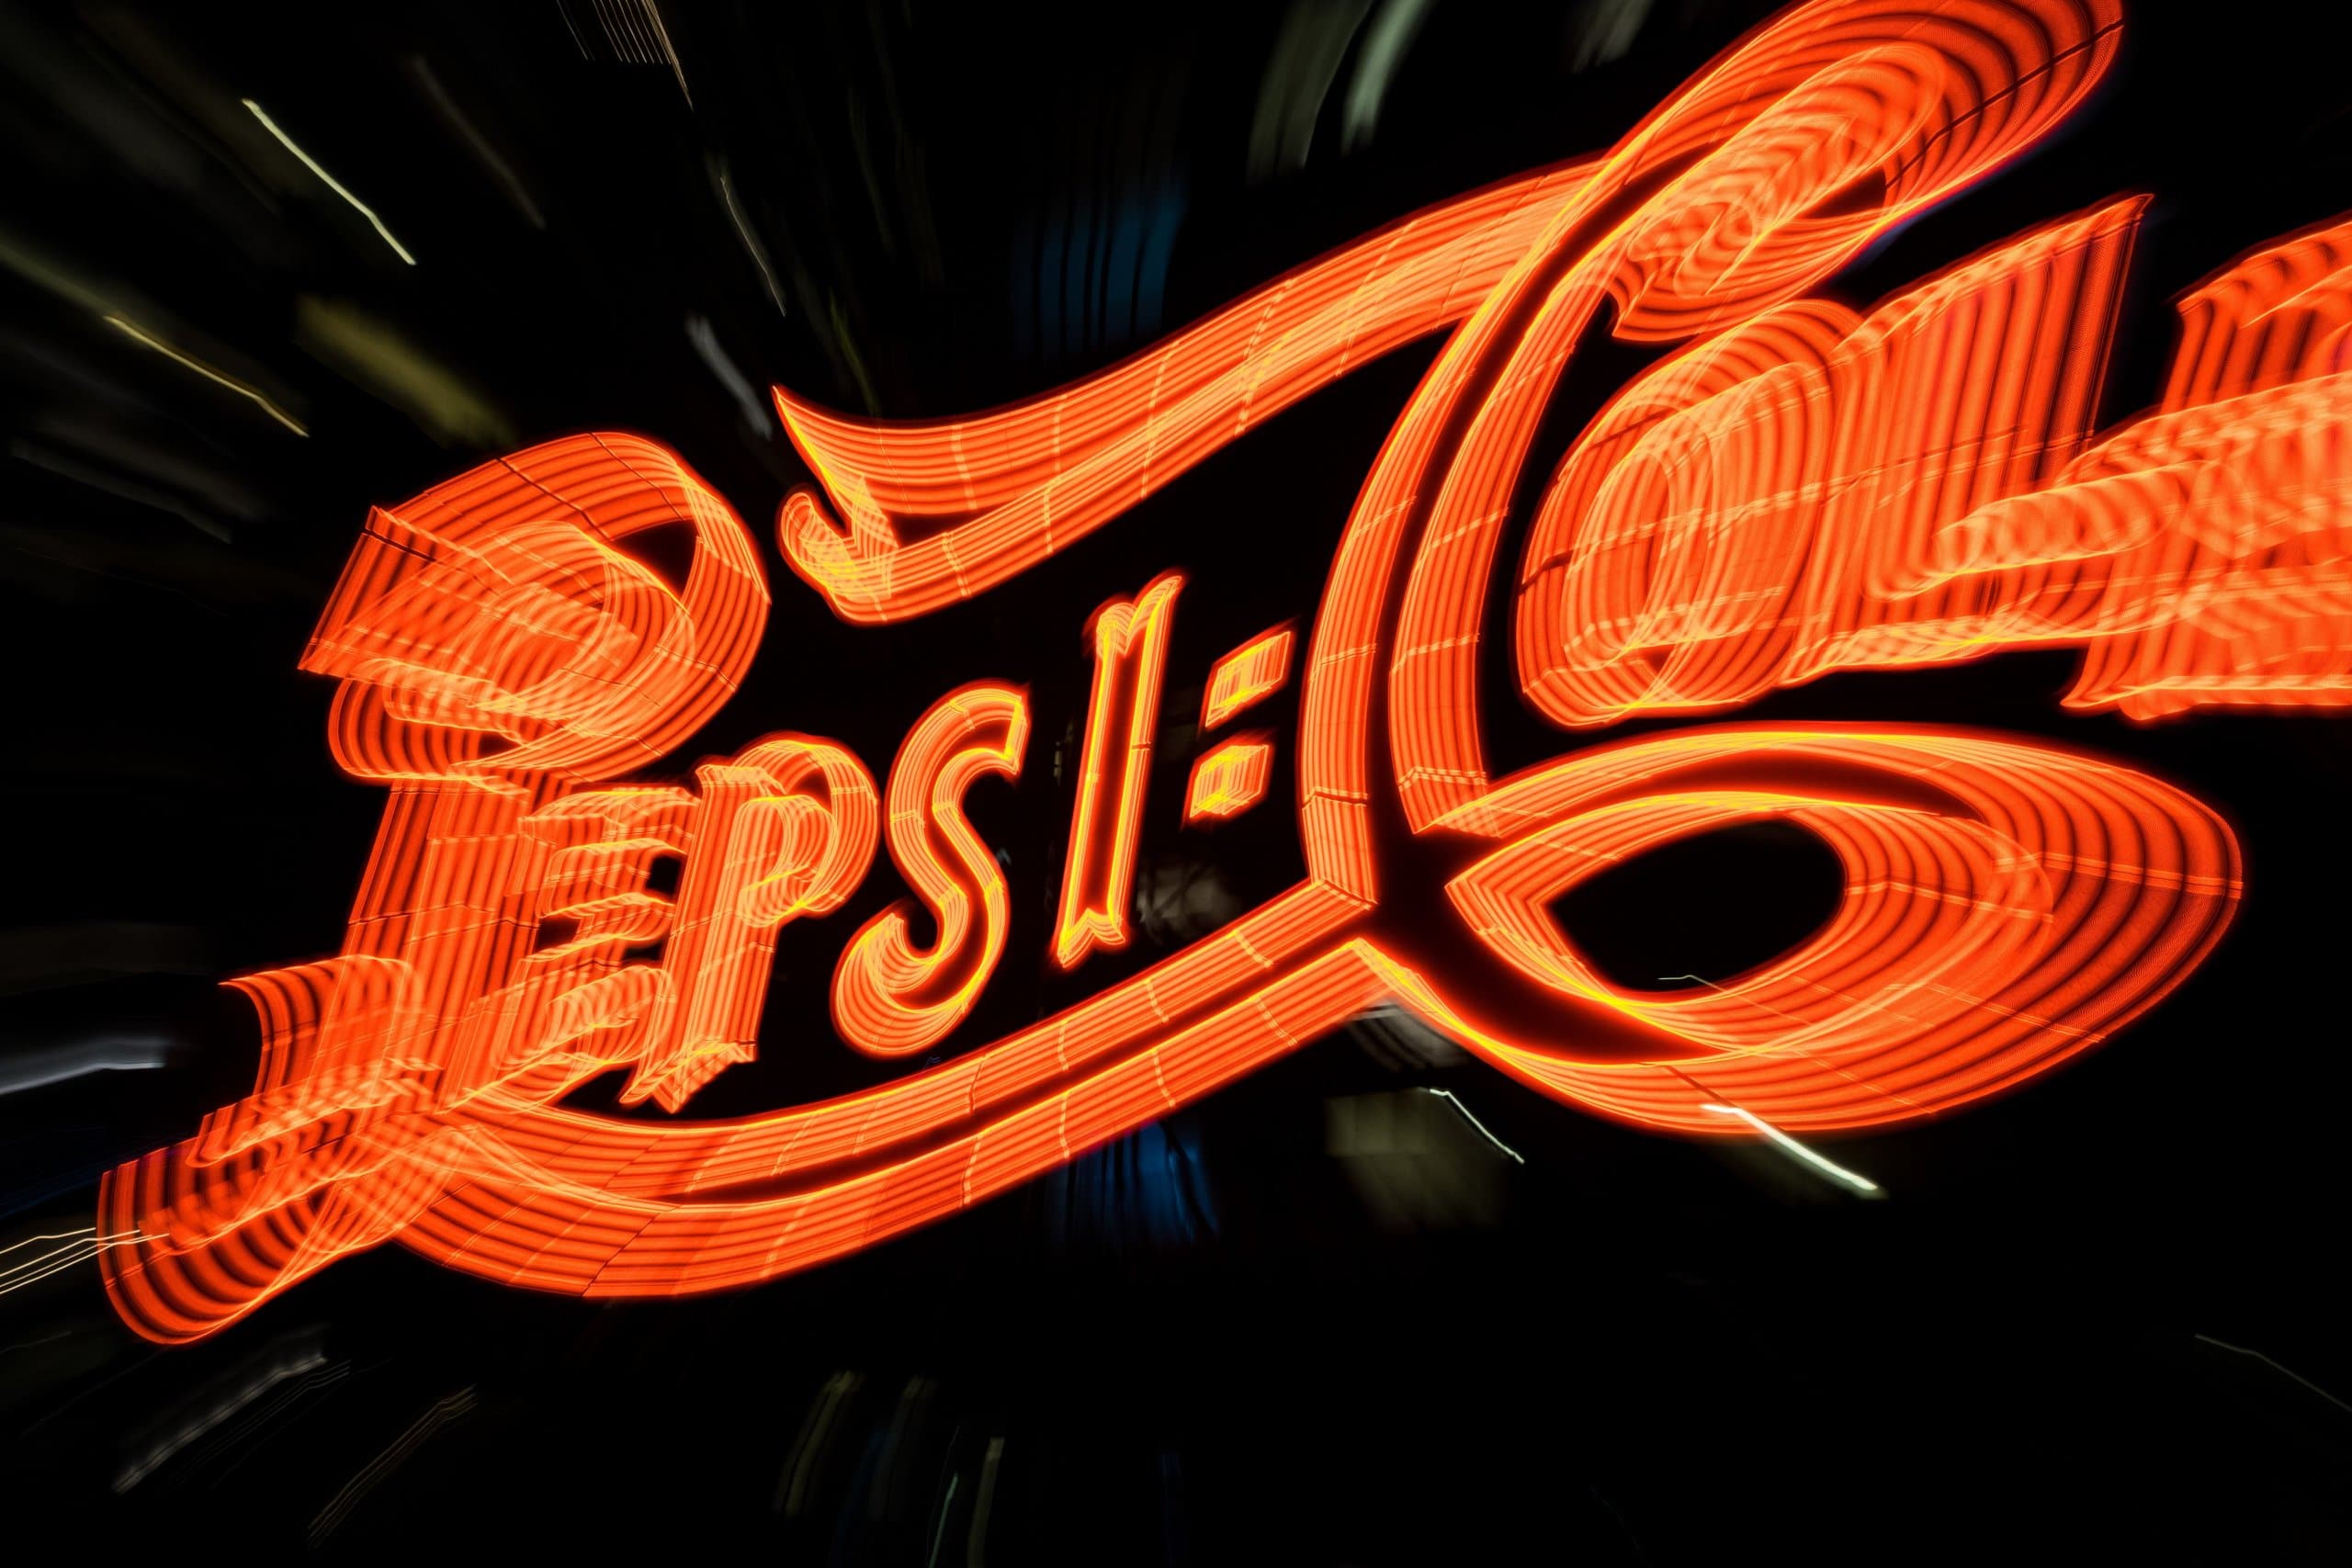 Pepsi-Cola neon sign